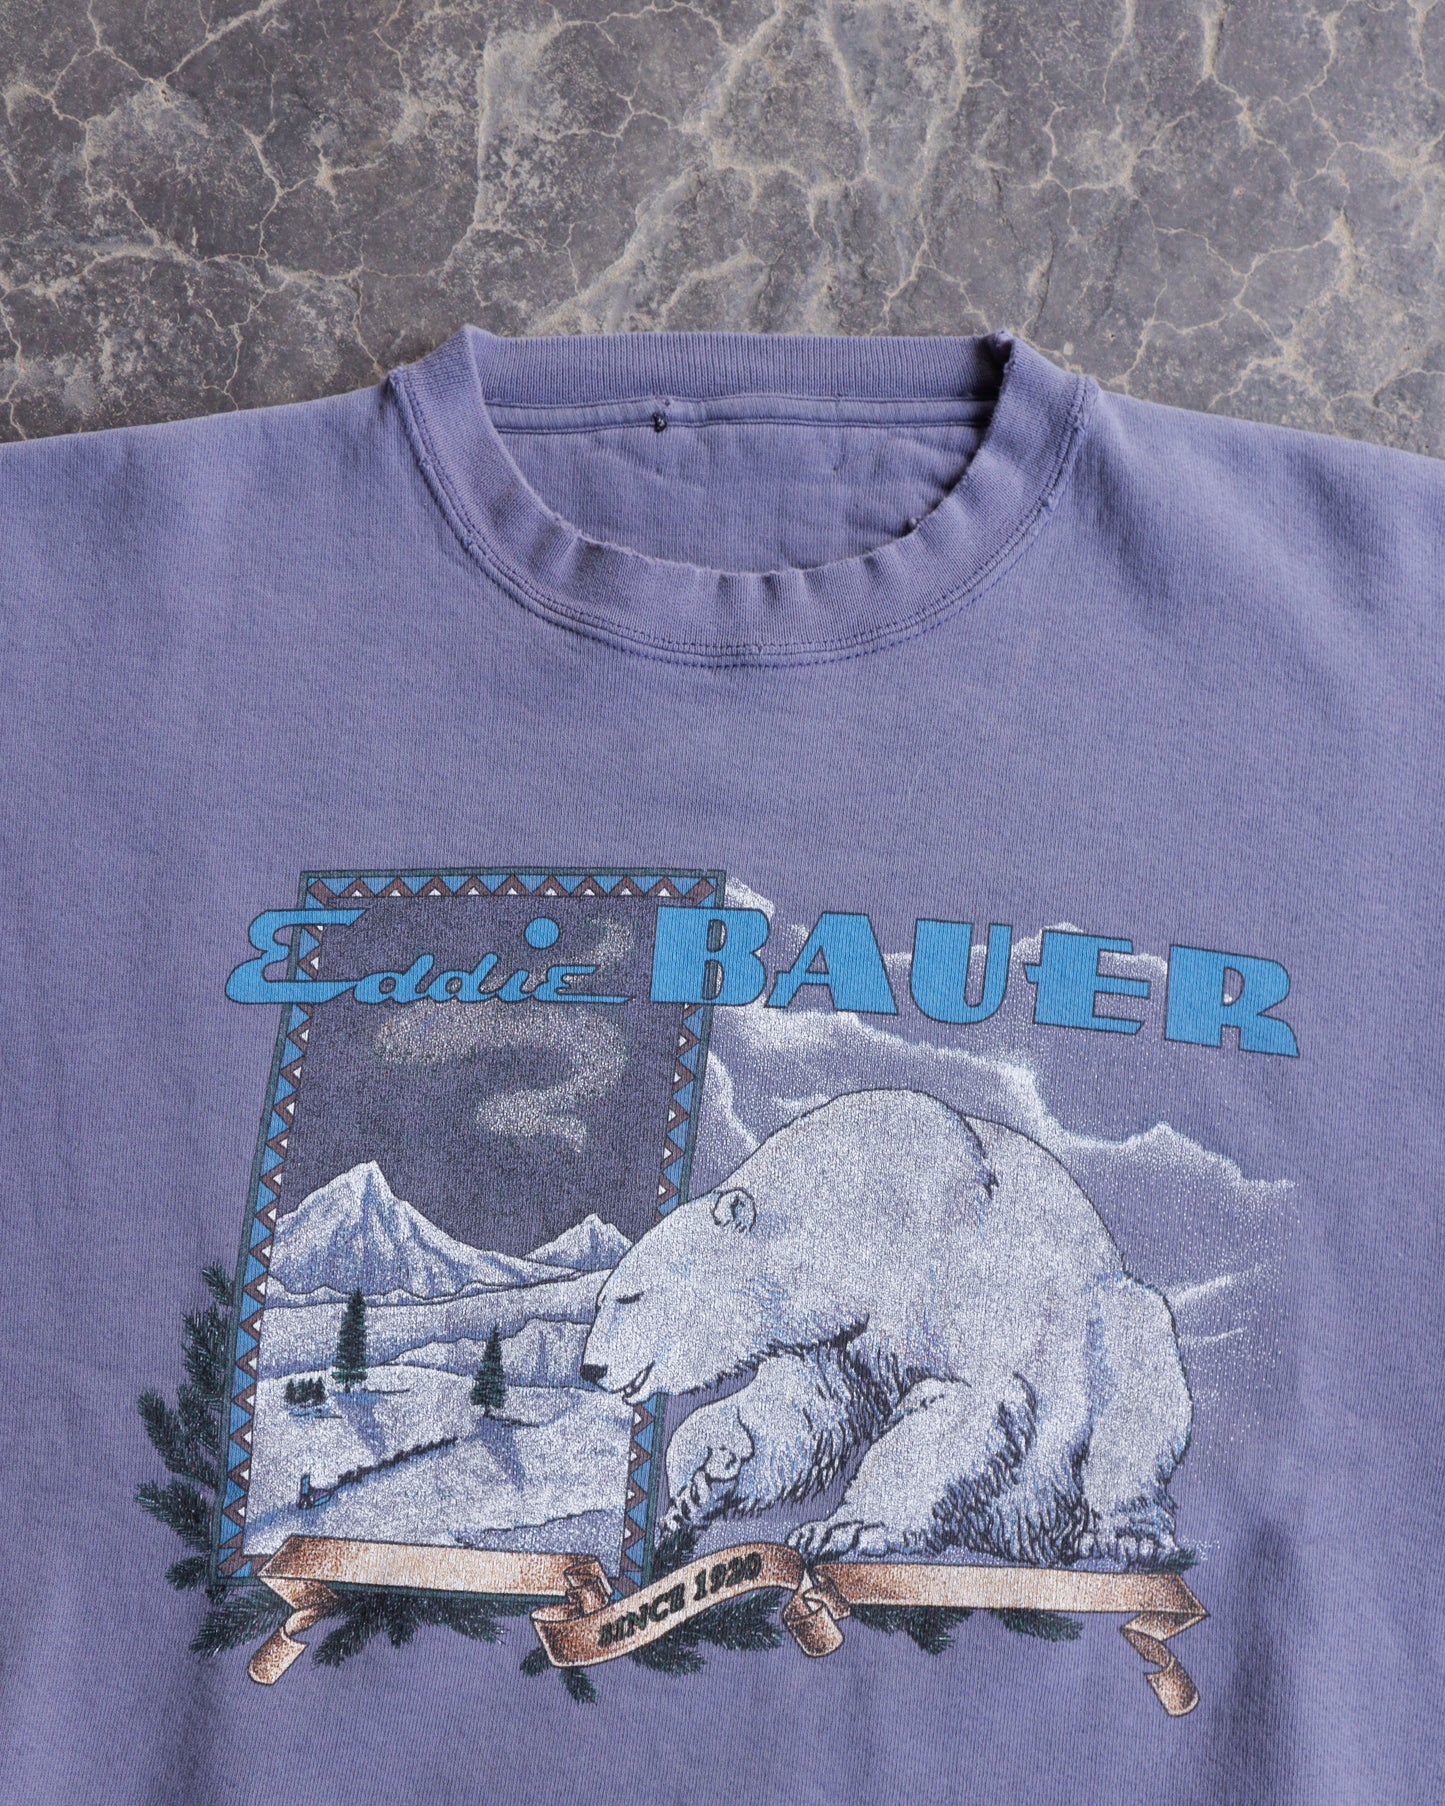 90s Eddie Bauer Polar Bear Faded Purple Crewneck Sweatshirt - L